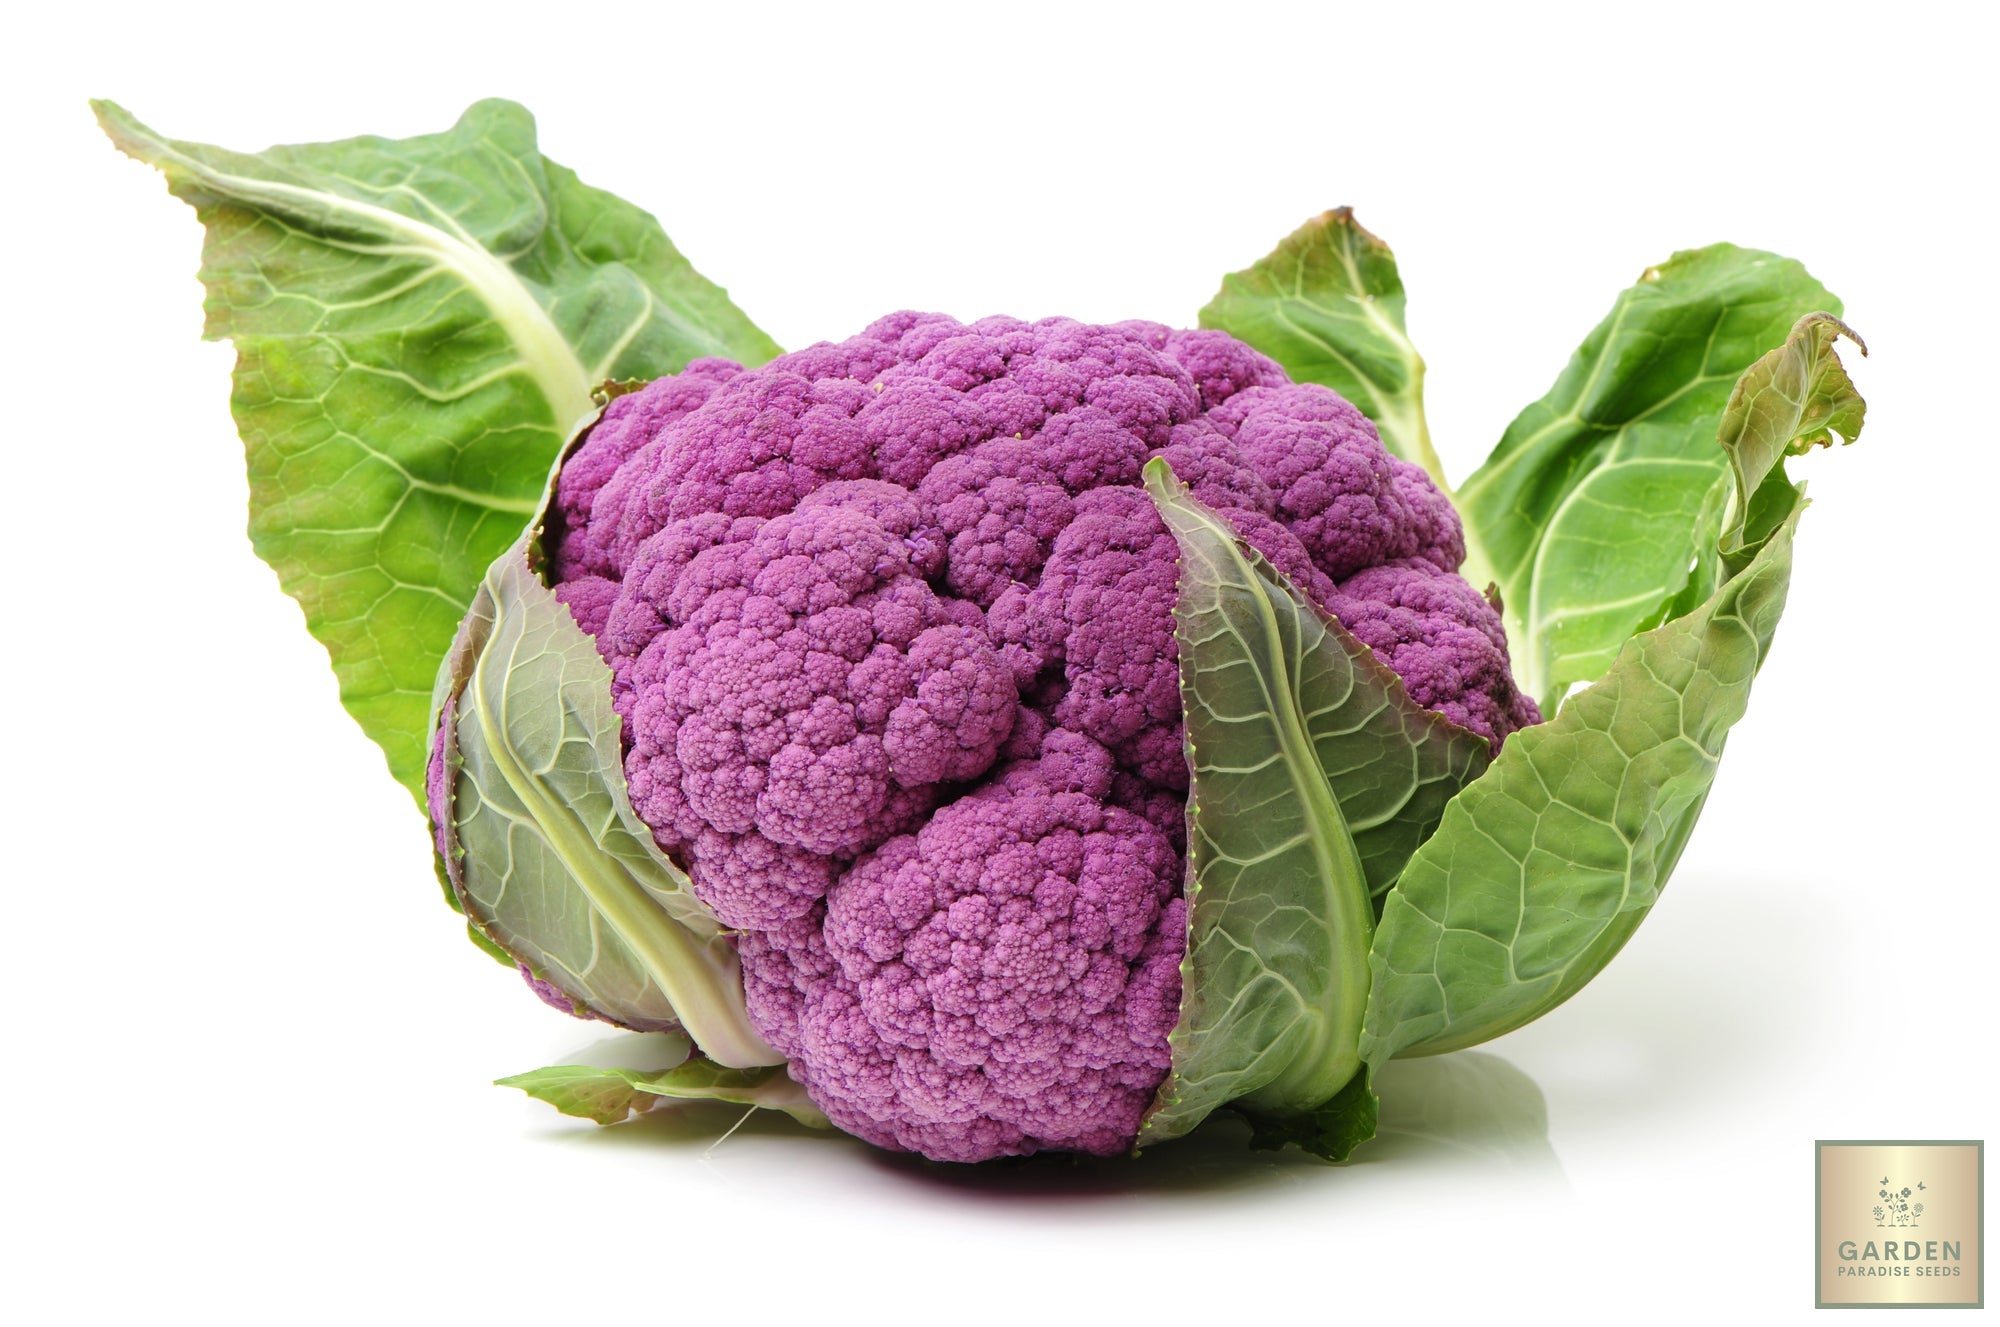 Buy Purple Cauliflower Seeds Online - Vibrant Additions to Your Garden